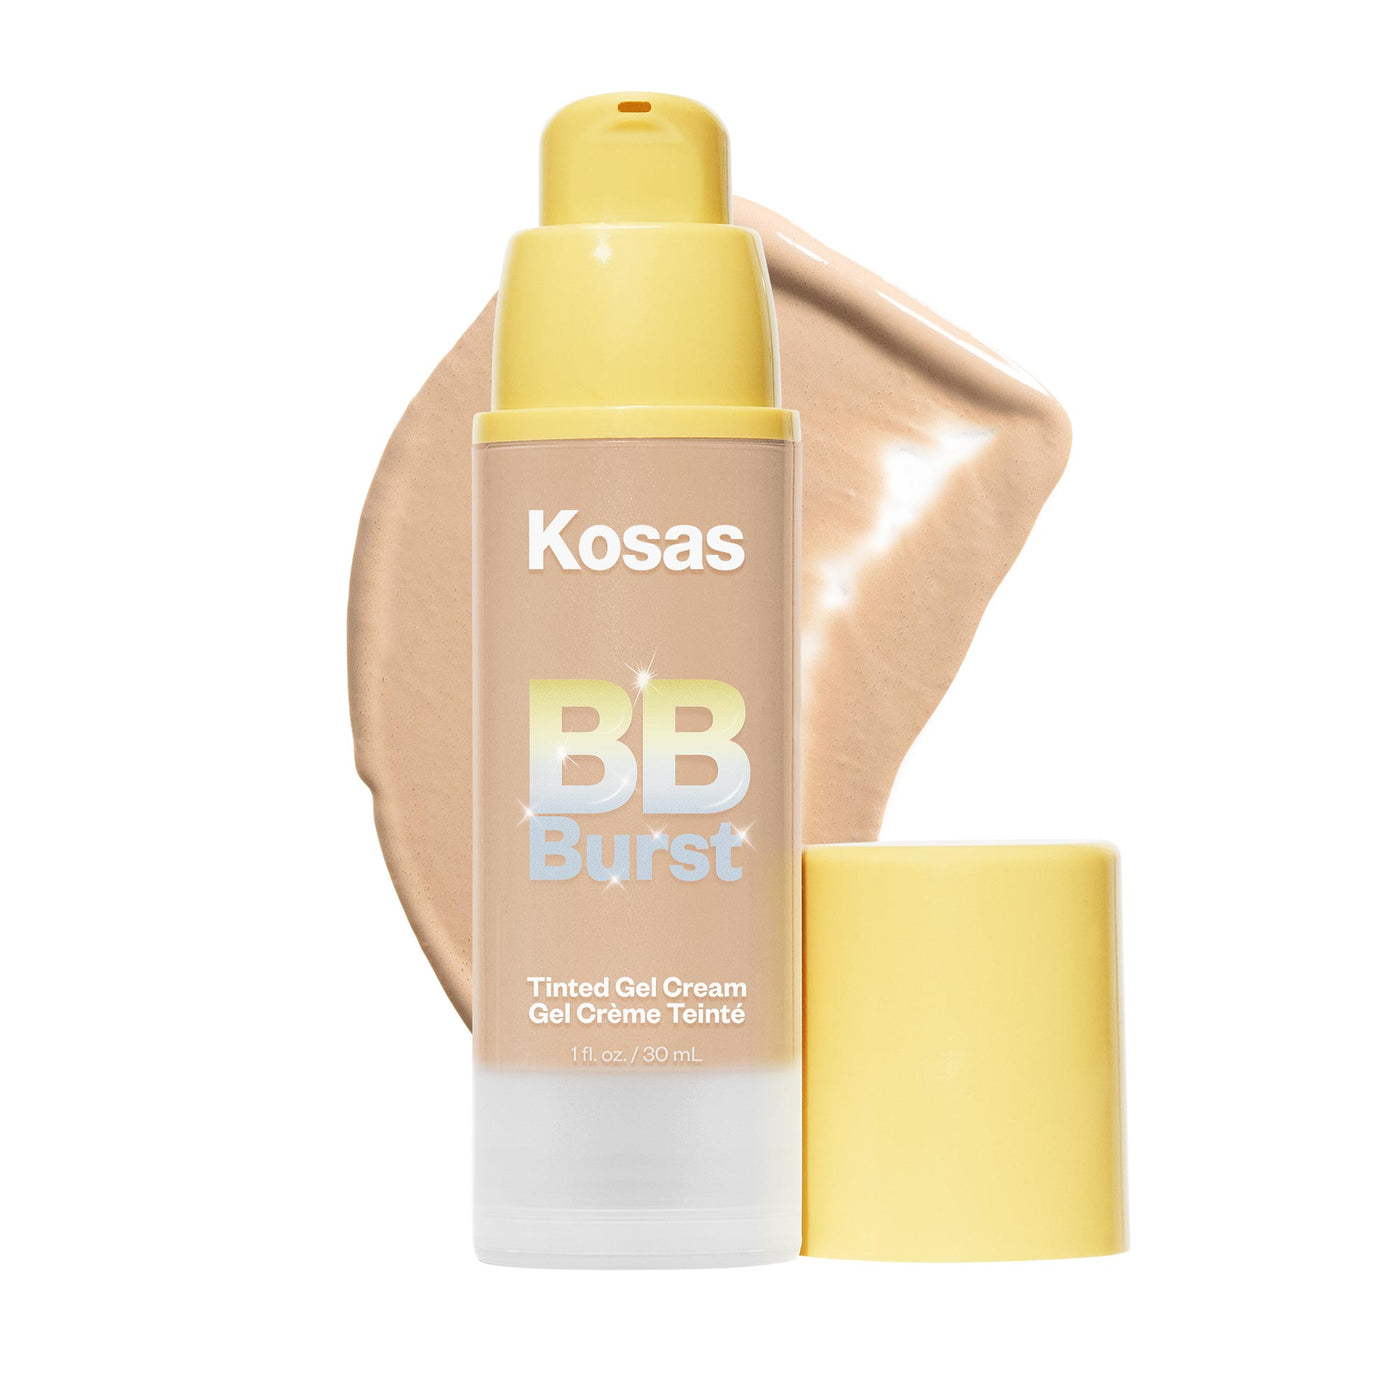 Kosas BB Burst Tinted Gel Cream 23